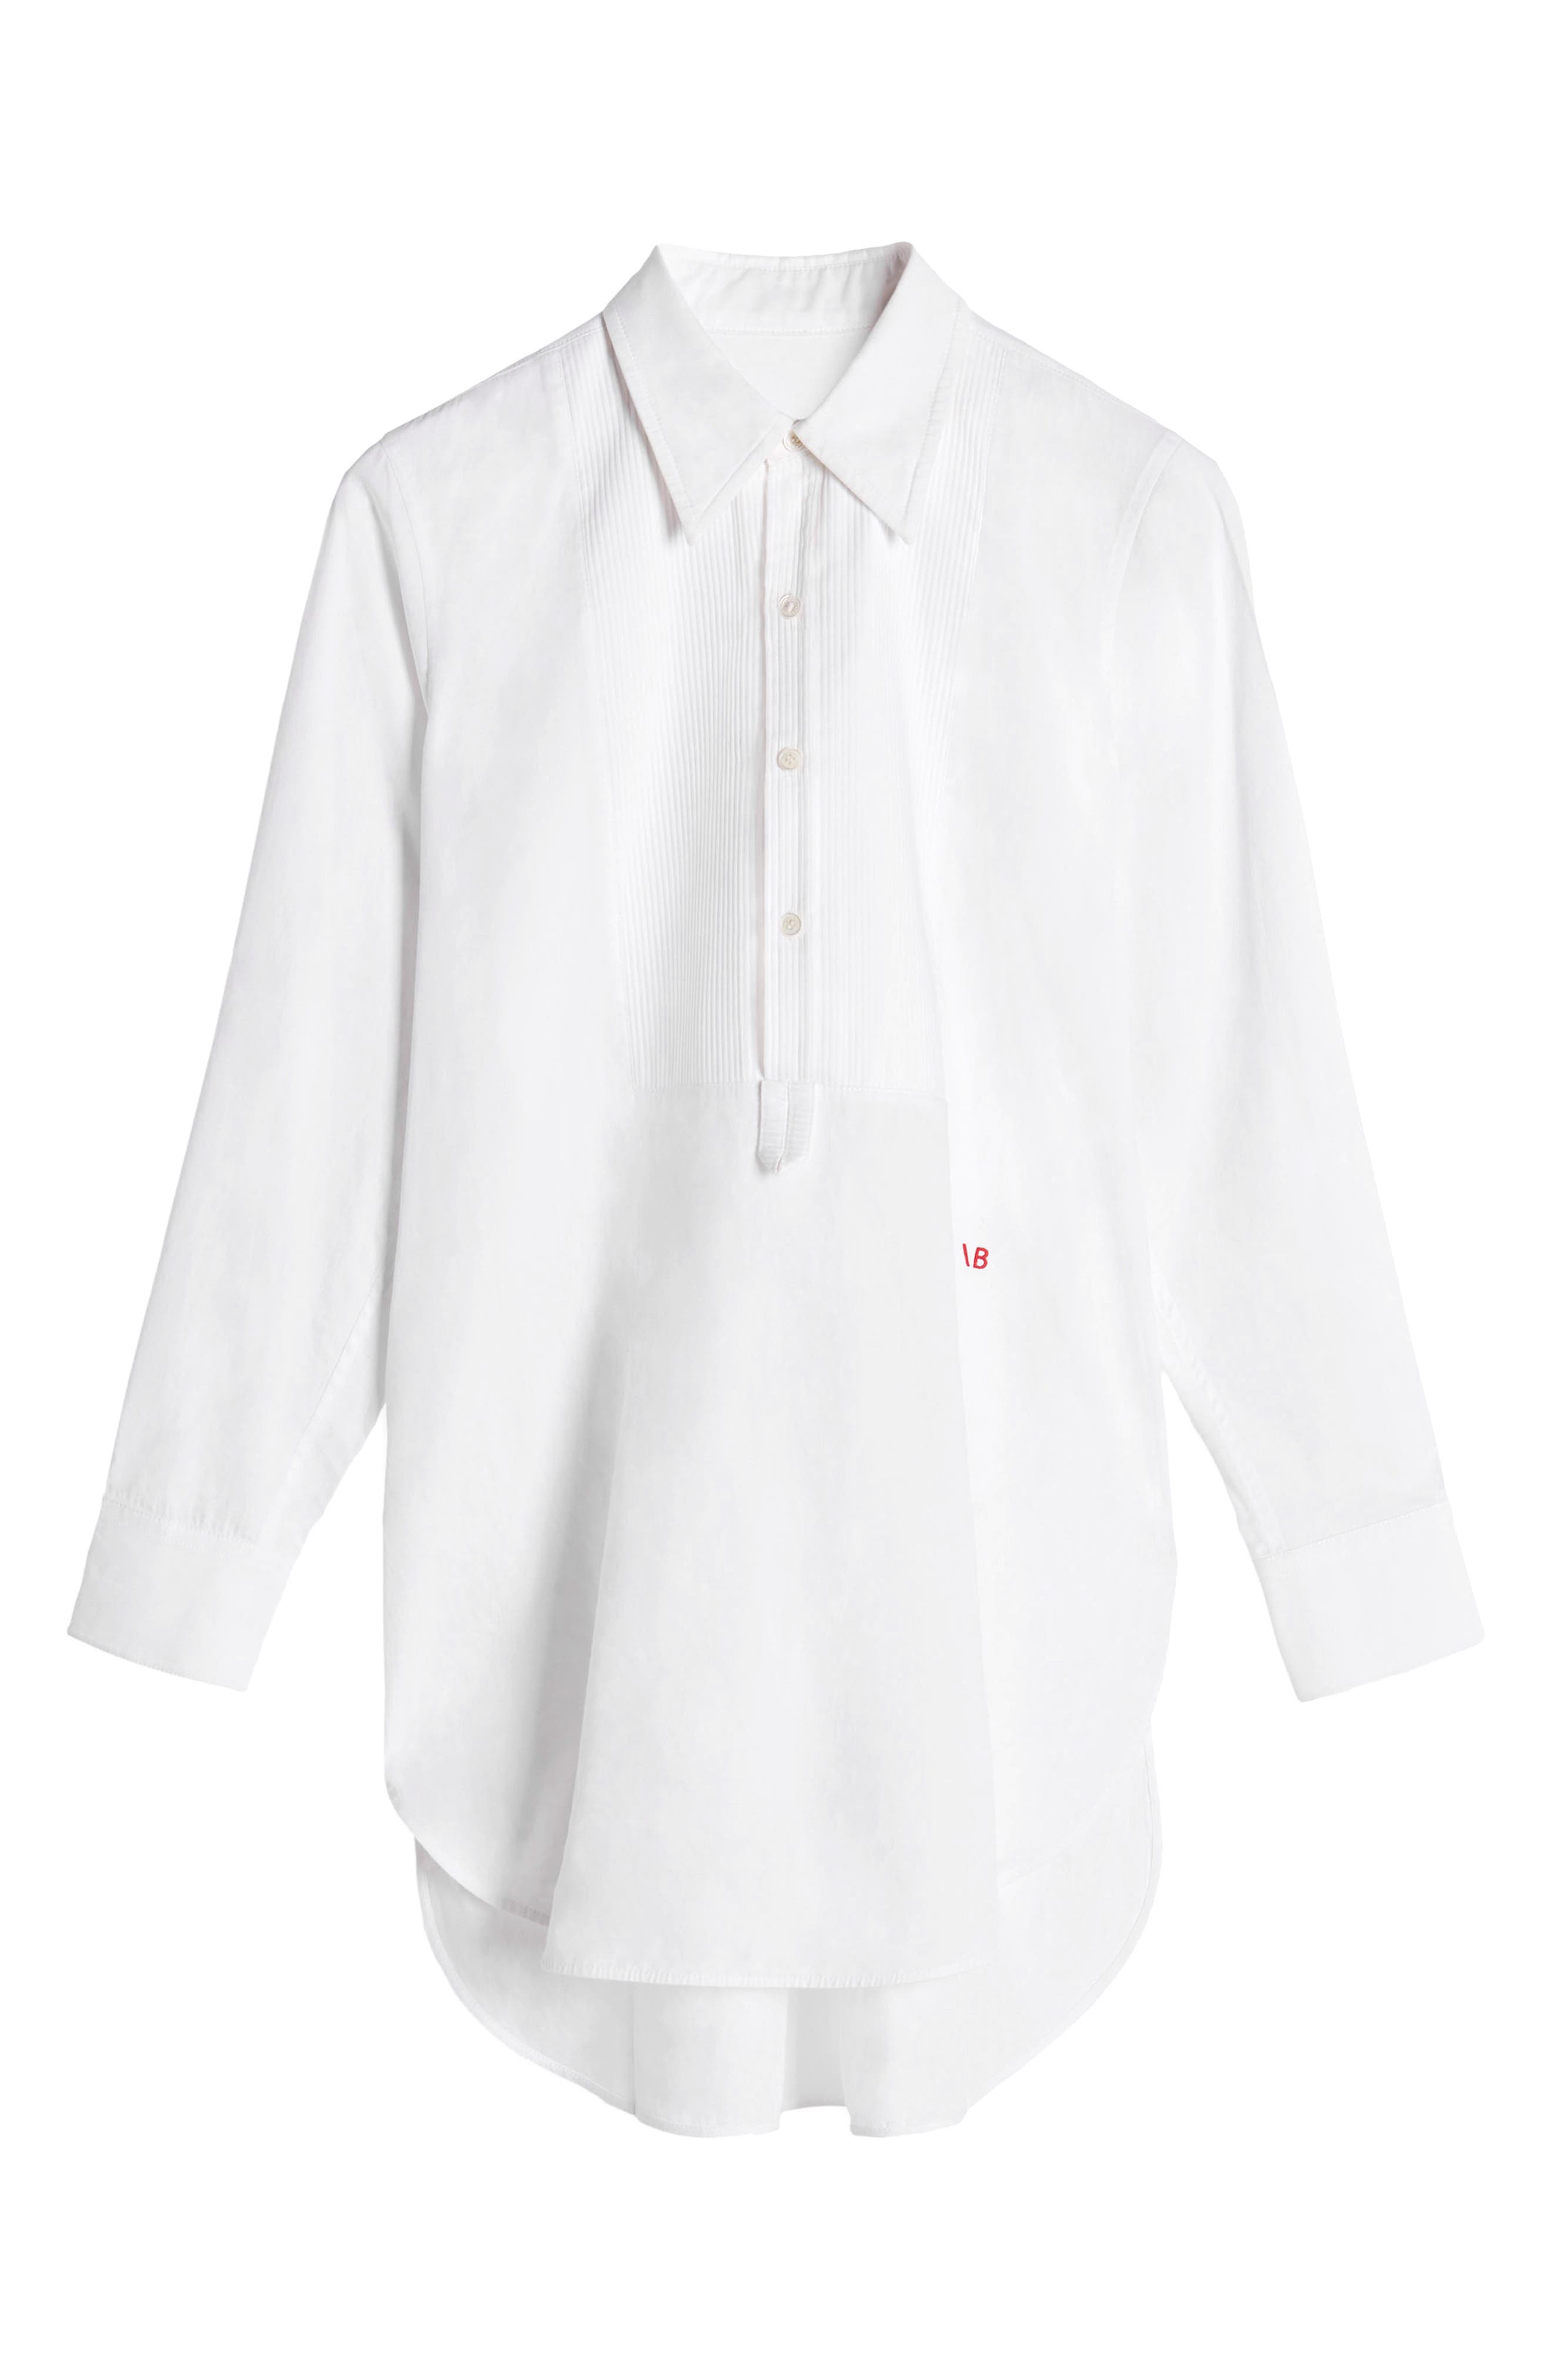 Victoria Beckham Tuxedo Bib Organic Cotton Shirt in White at Nordstrom, Size 2 Us